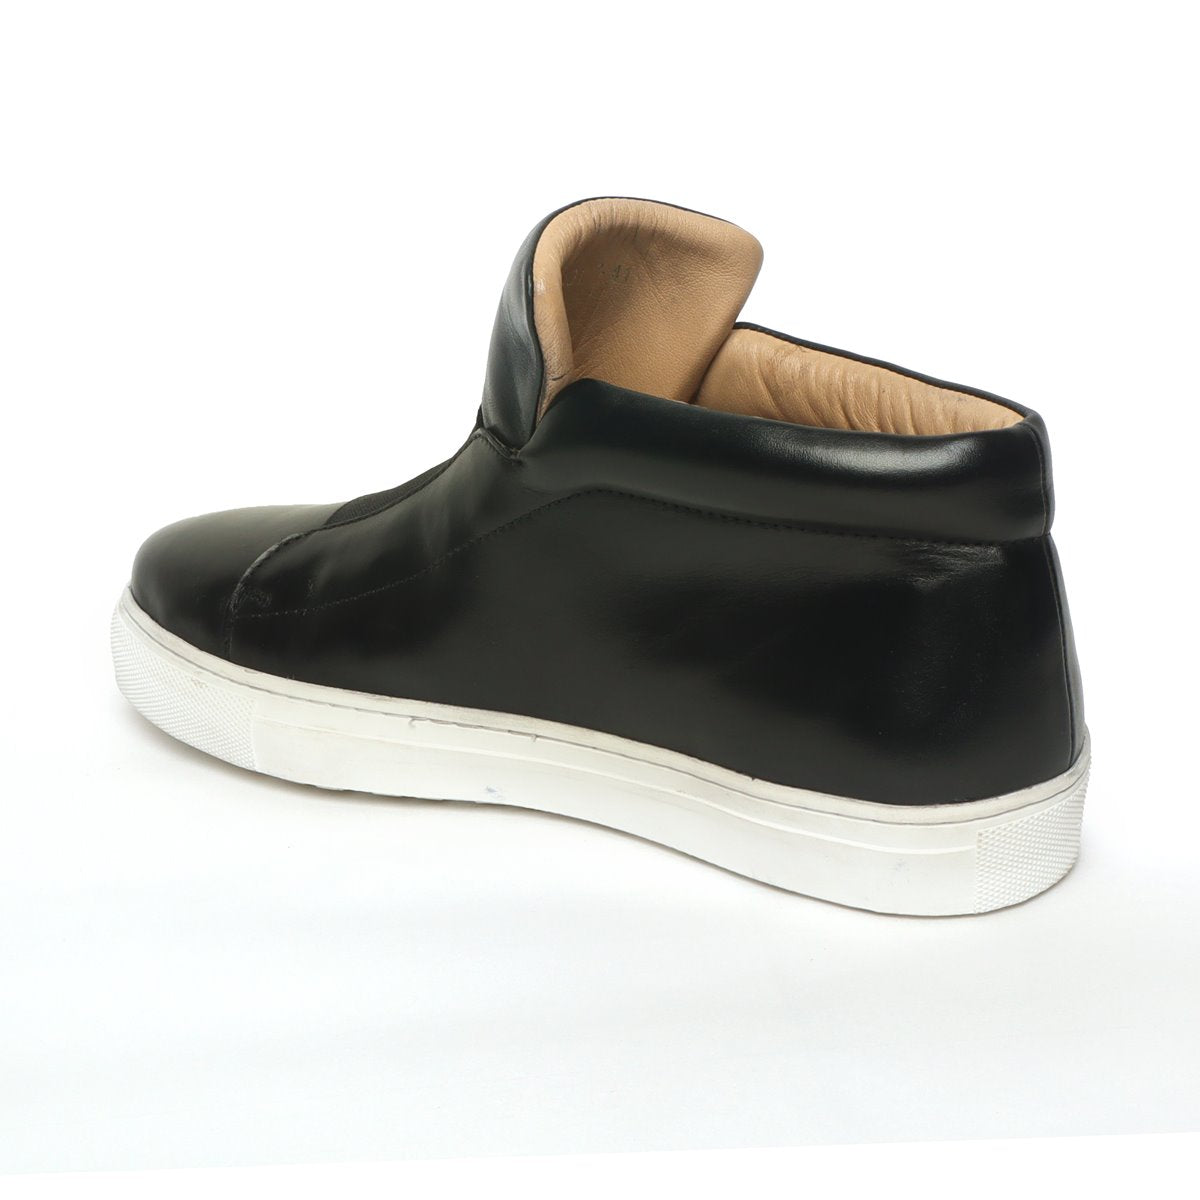 Adidas Originals Forum Mid Men's Sneakers Comfort Casual Shoes High Top  White | eBay